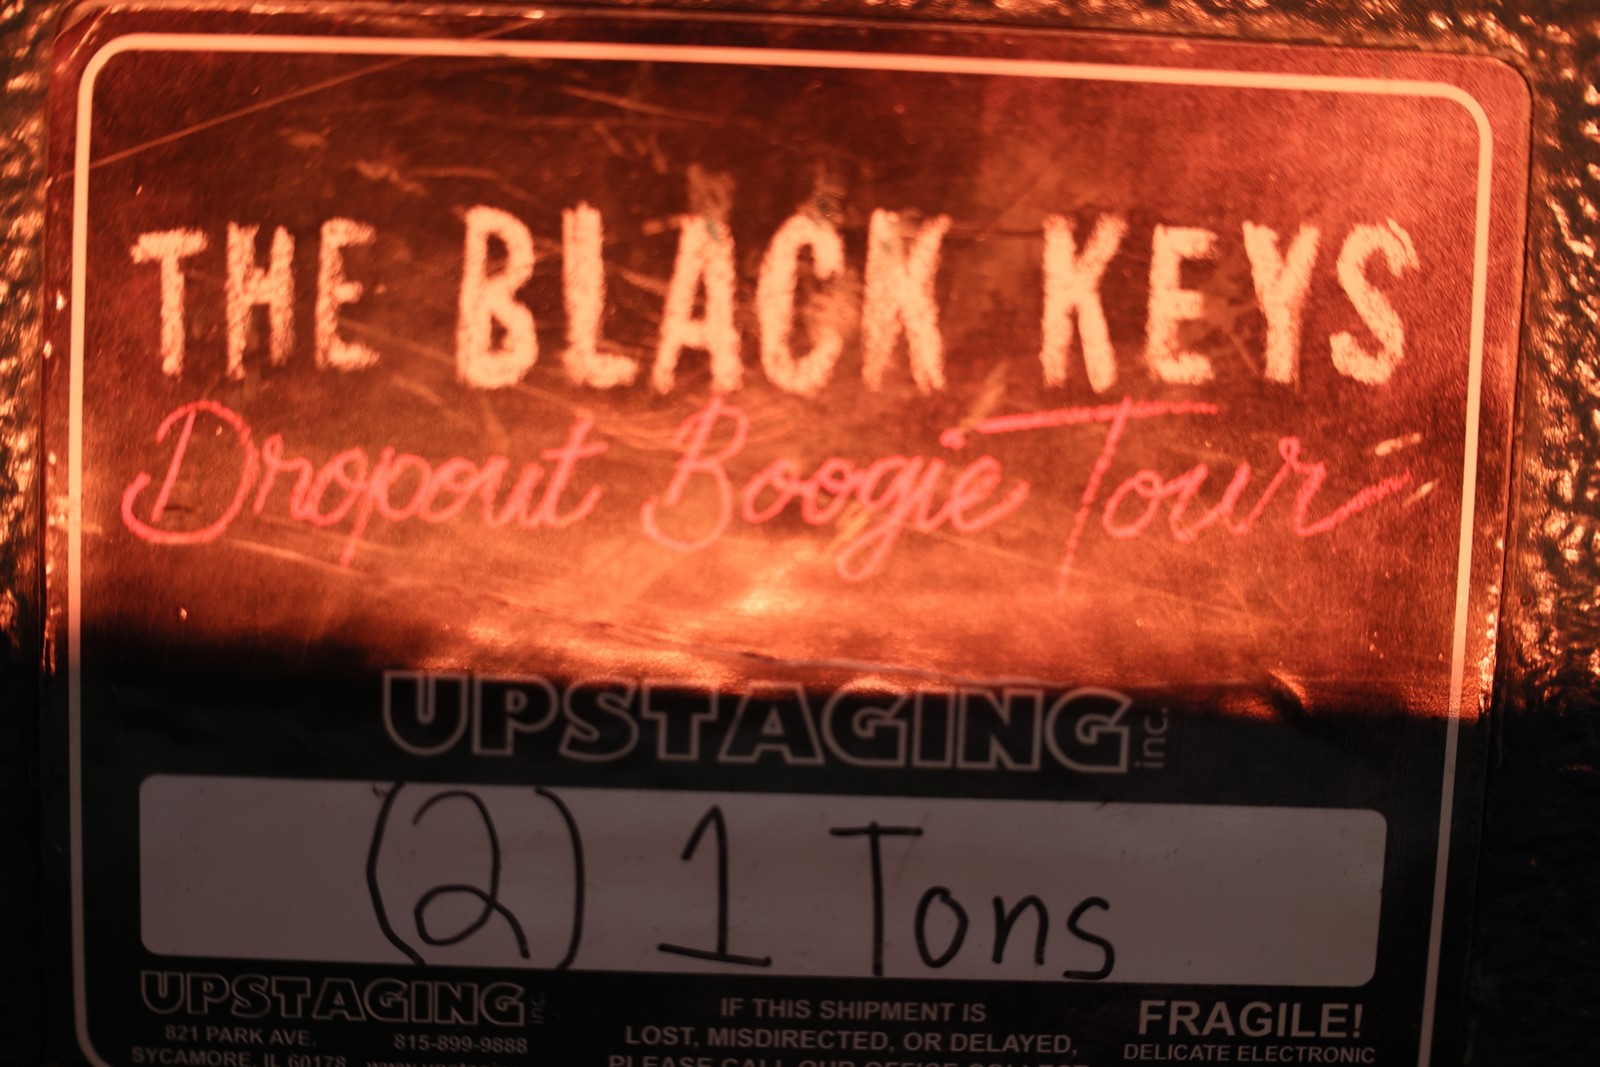 The Black Keys Dropout Boogie Tour - Raleigh